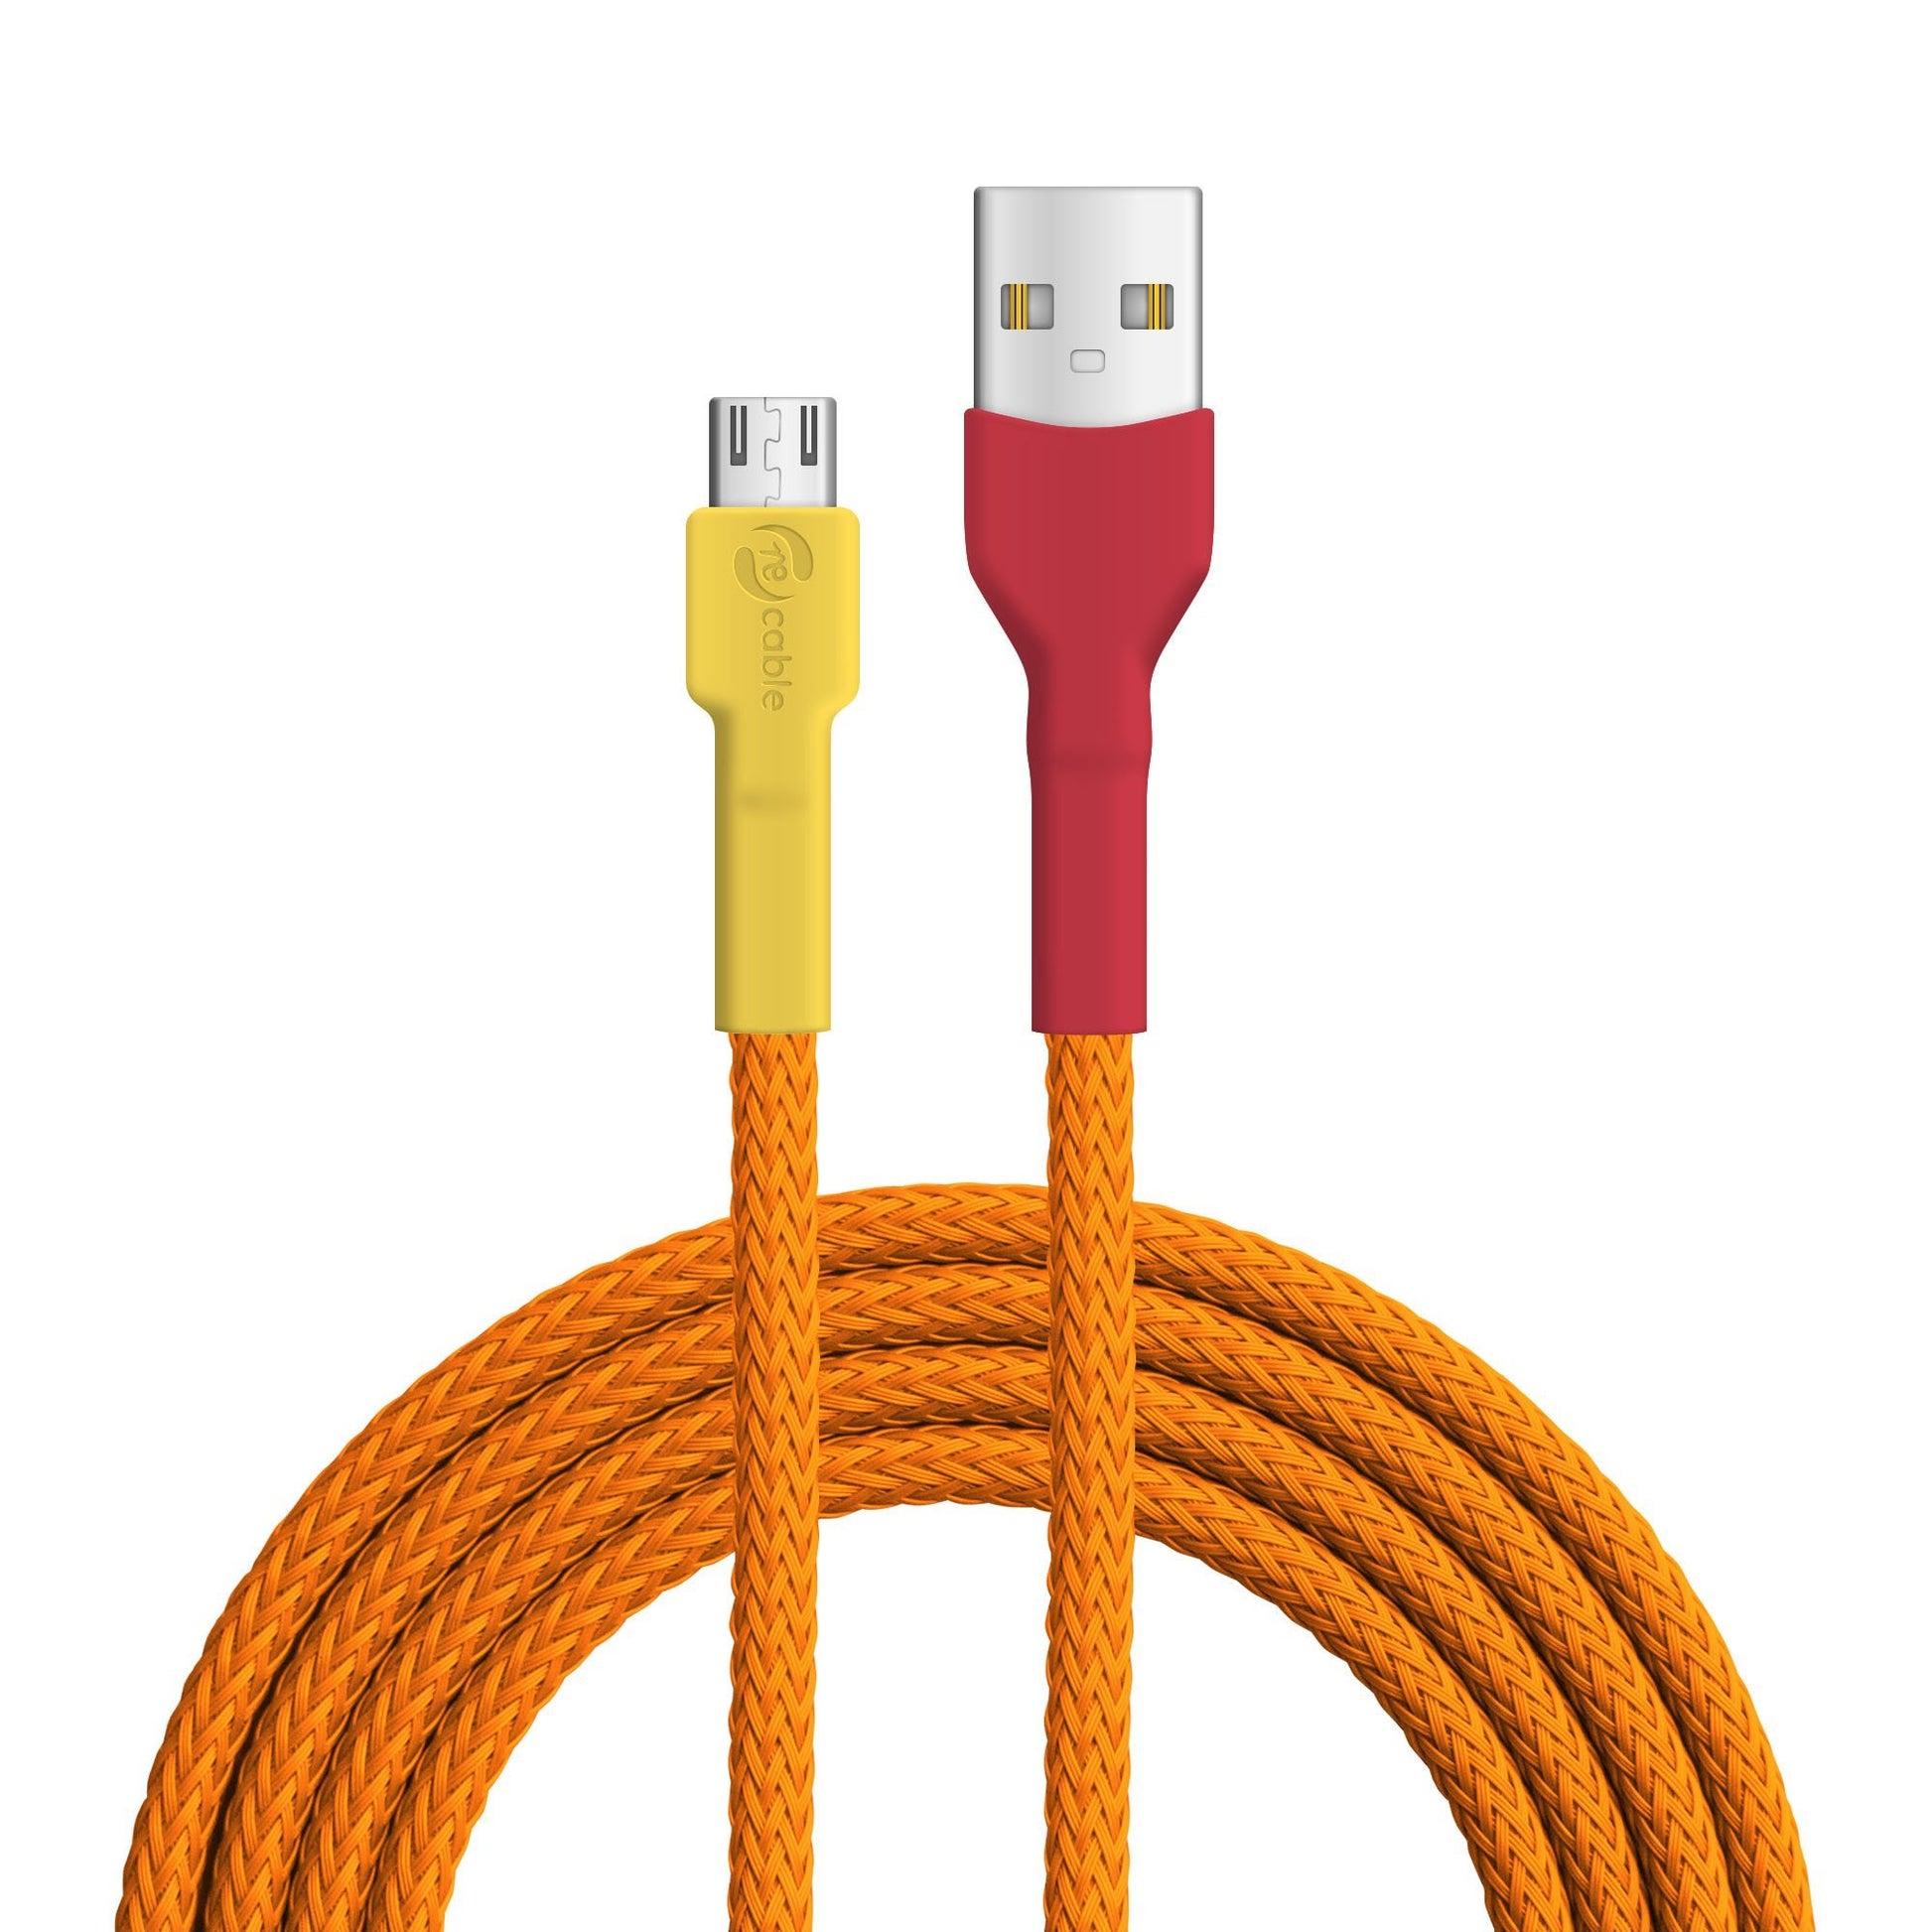 USB-Kabel, Design: Flammenlaubenvogel, Anschlüsse: USB A auf Micro-USB